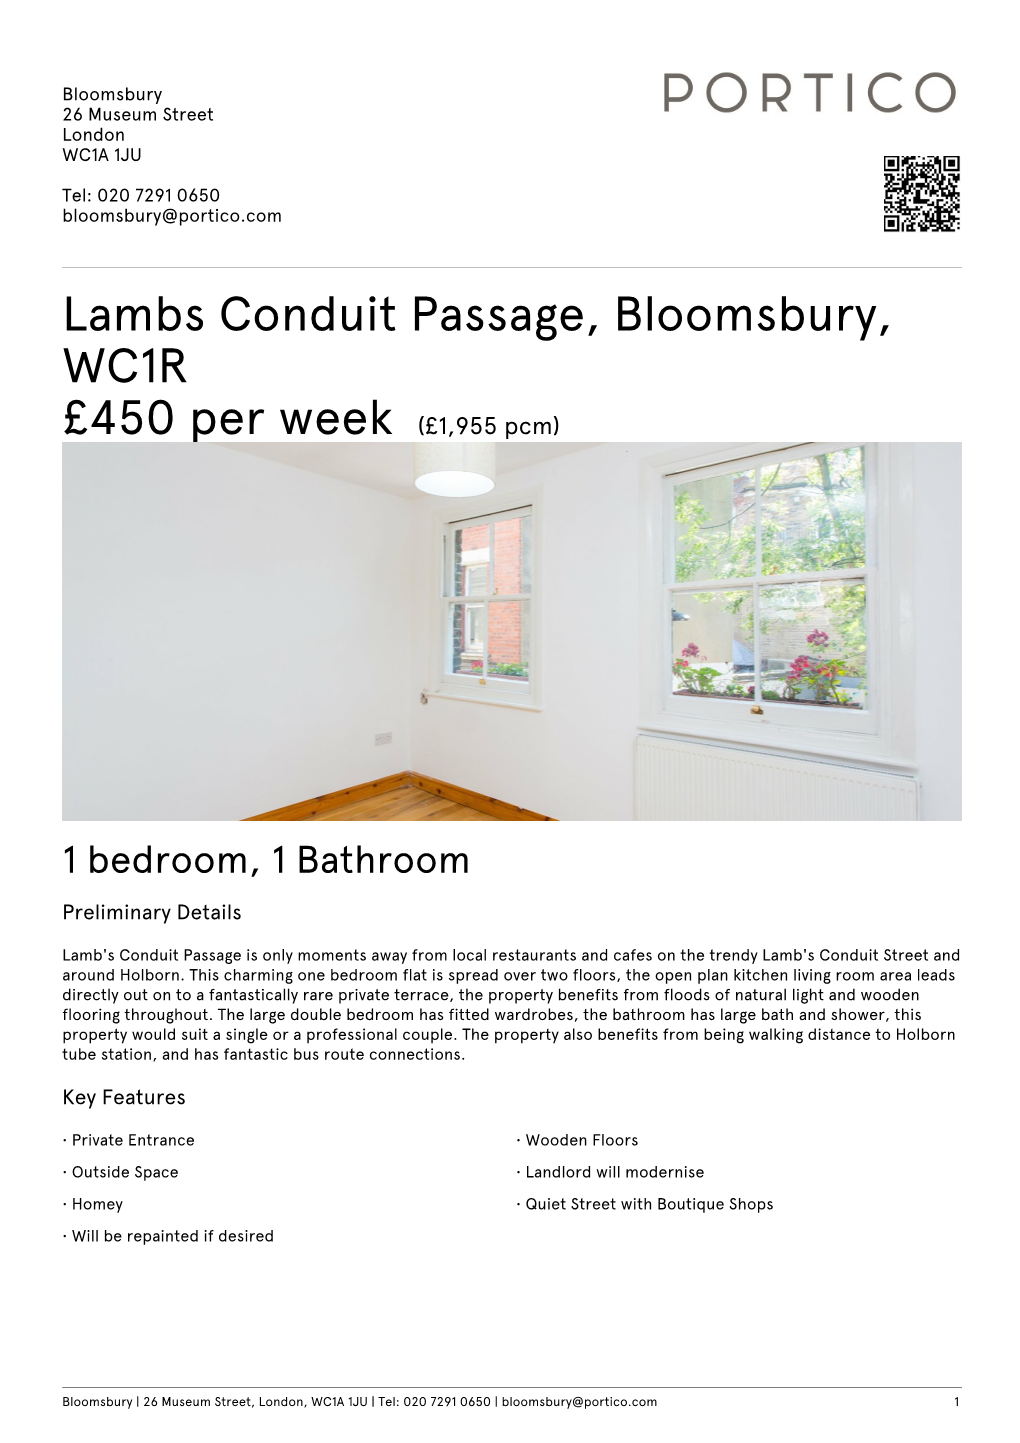 Lambs Conduit Passage, Bloomsbury, WC1R £450